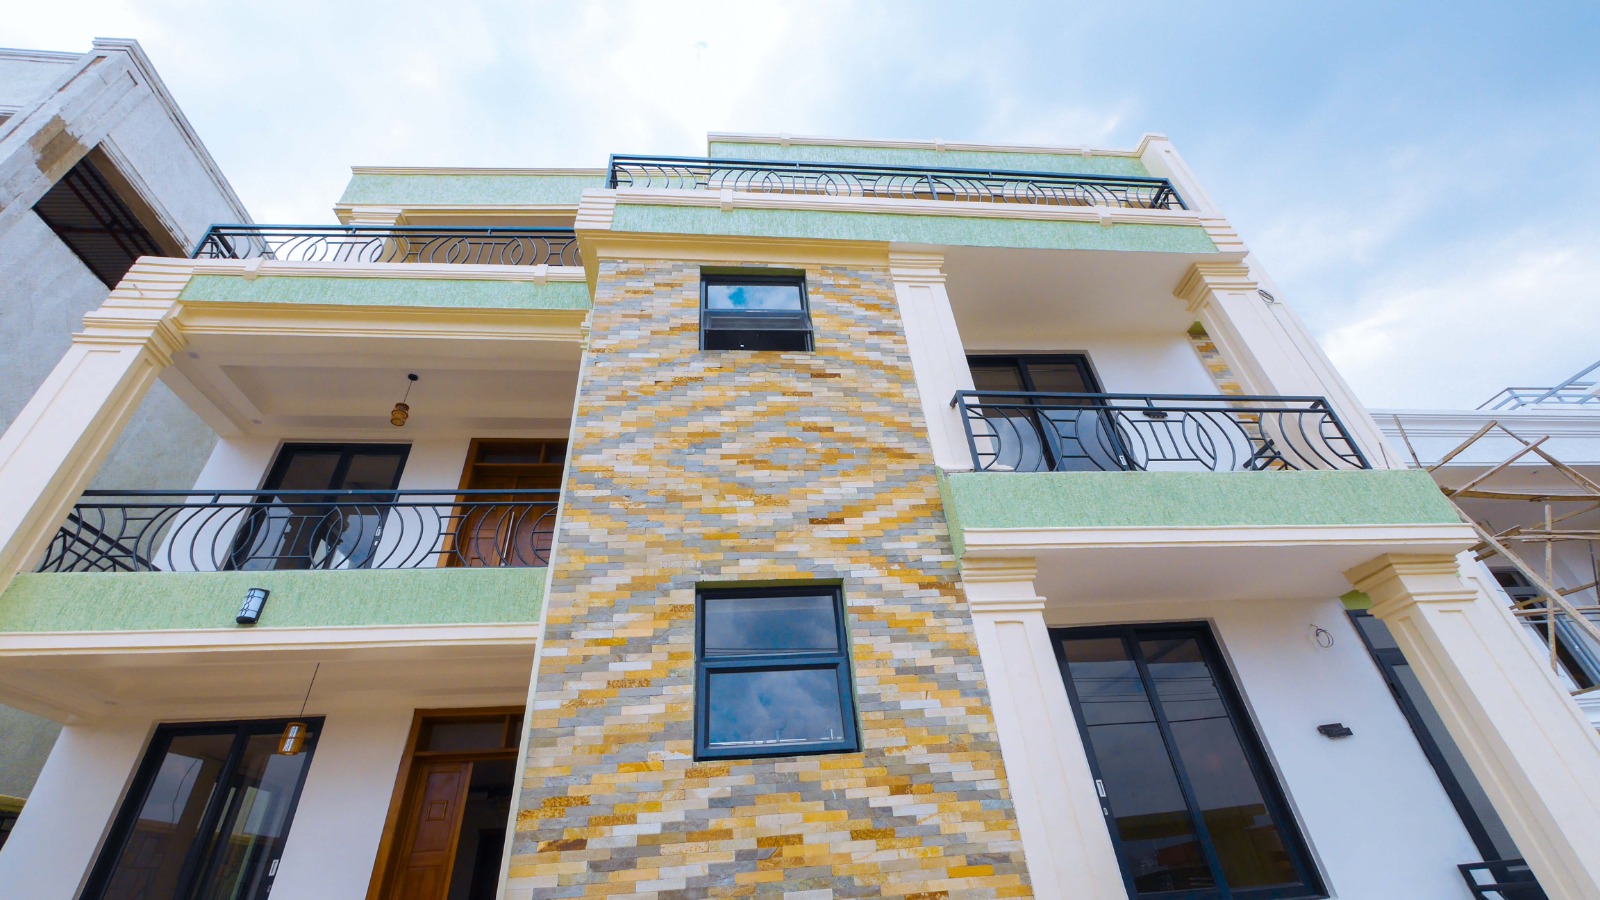 FF096 Kibagabaga new and nice unfurnished house For rent in Kigali Rwanda